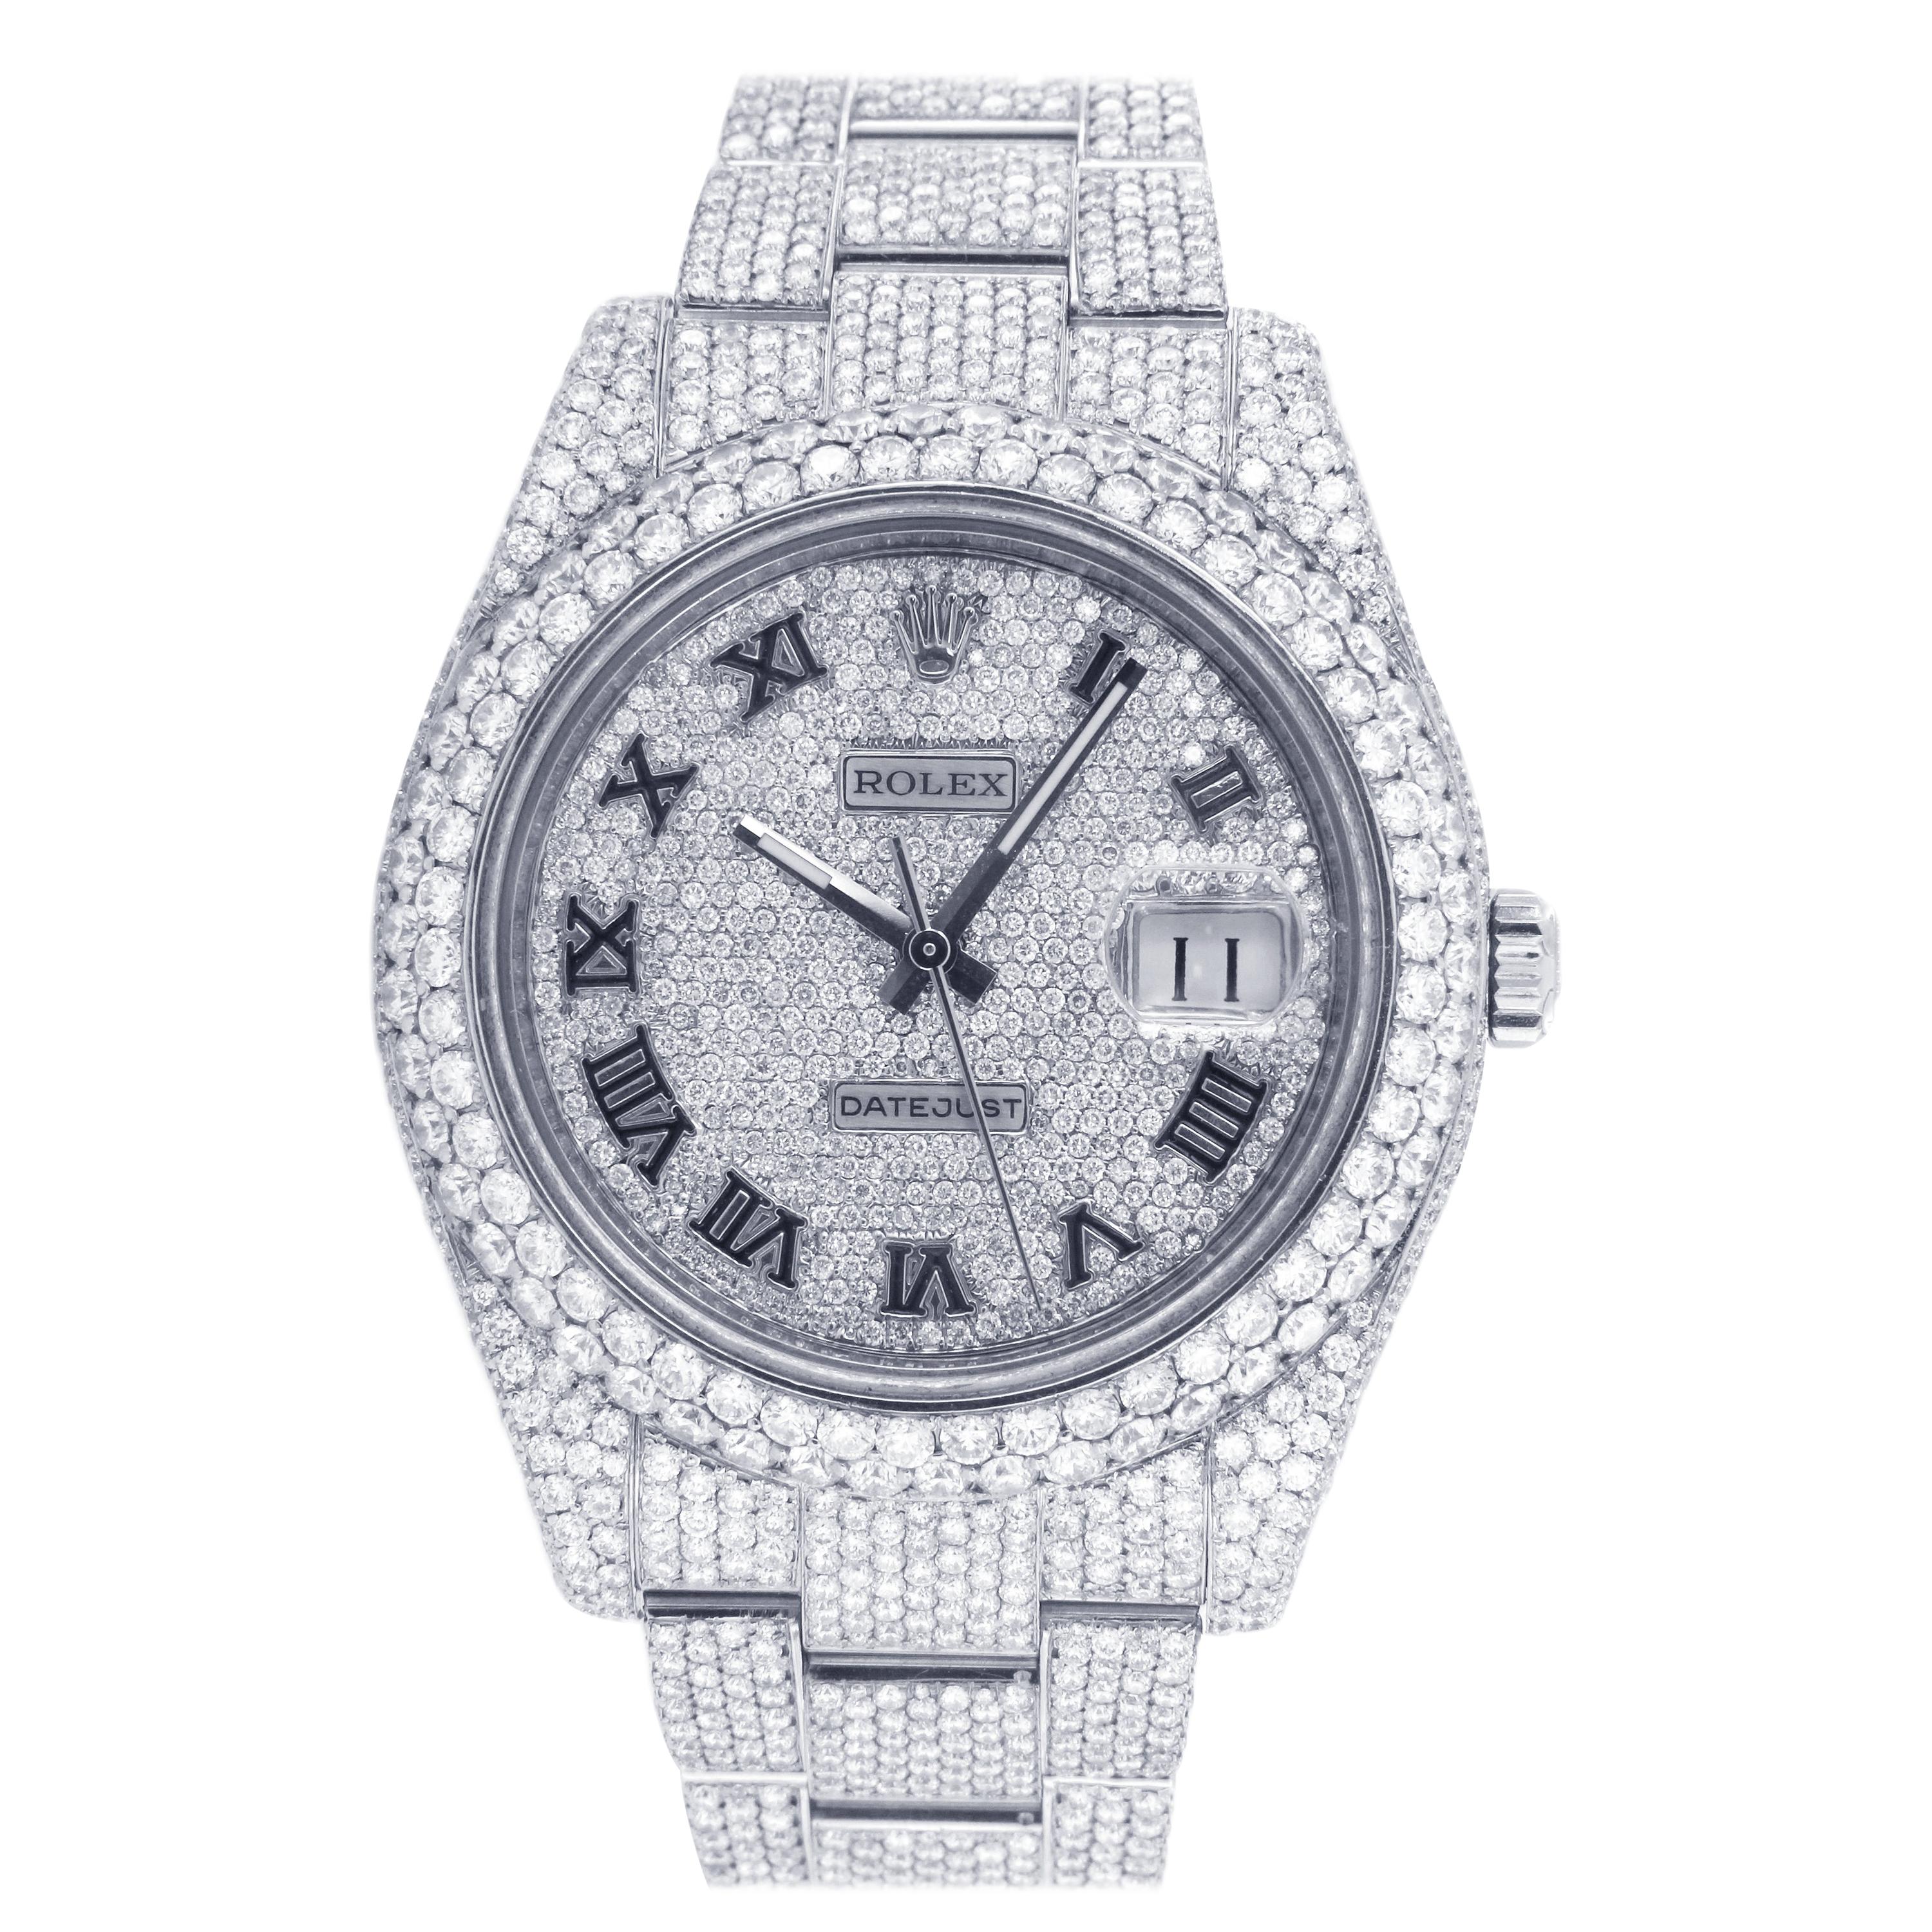 Rolex Datejust II Roman Numeral Dial Aftermarket Diamond Watch